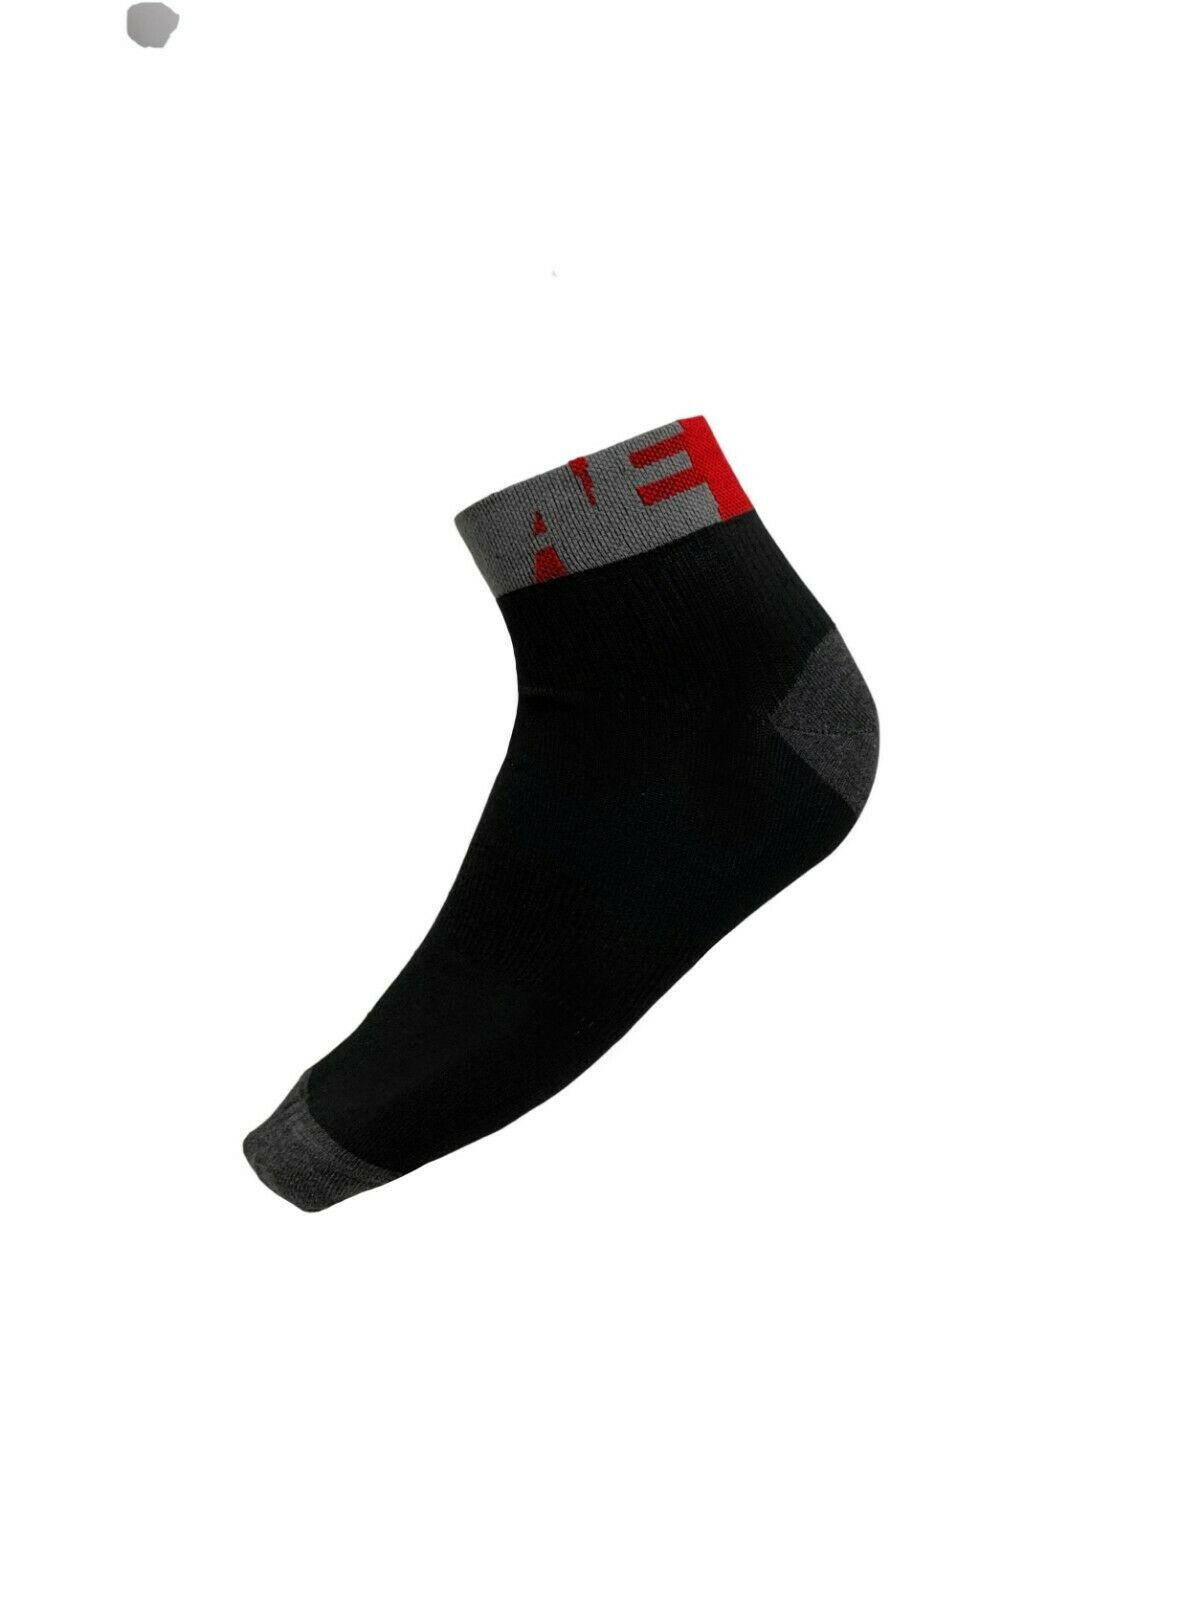 Ultima AE Coolmax Cycling Socks - Black / Red - XL - EU48 / EU51 - Sportandleisure.com (6968159994010)